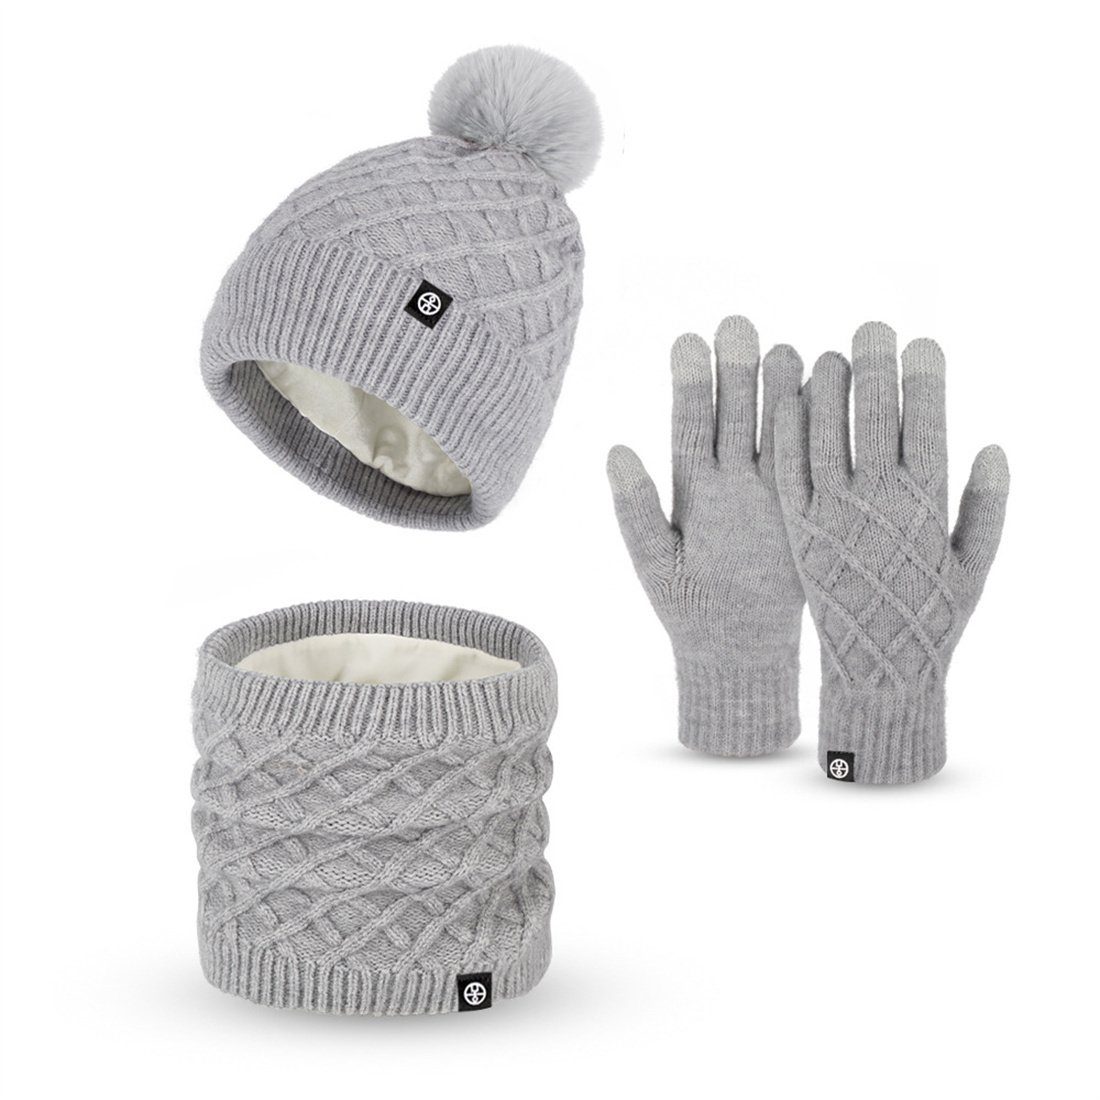 DÖRÖY Strickmütze Winter gepolstert Schal Mütze Stück, Handschuhe Schwarz 3 Warm Set Warm